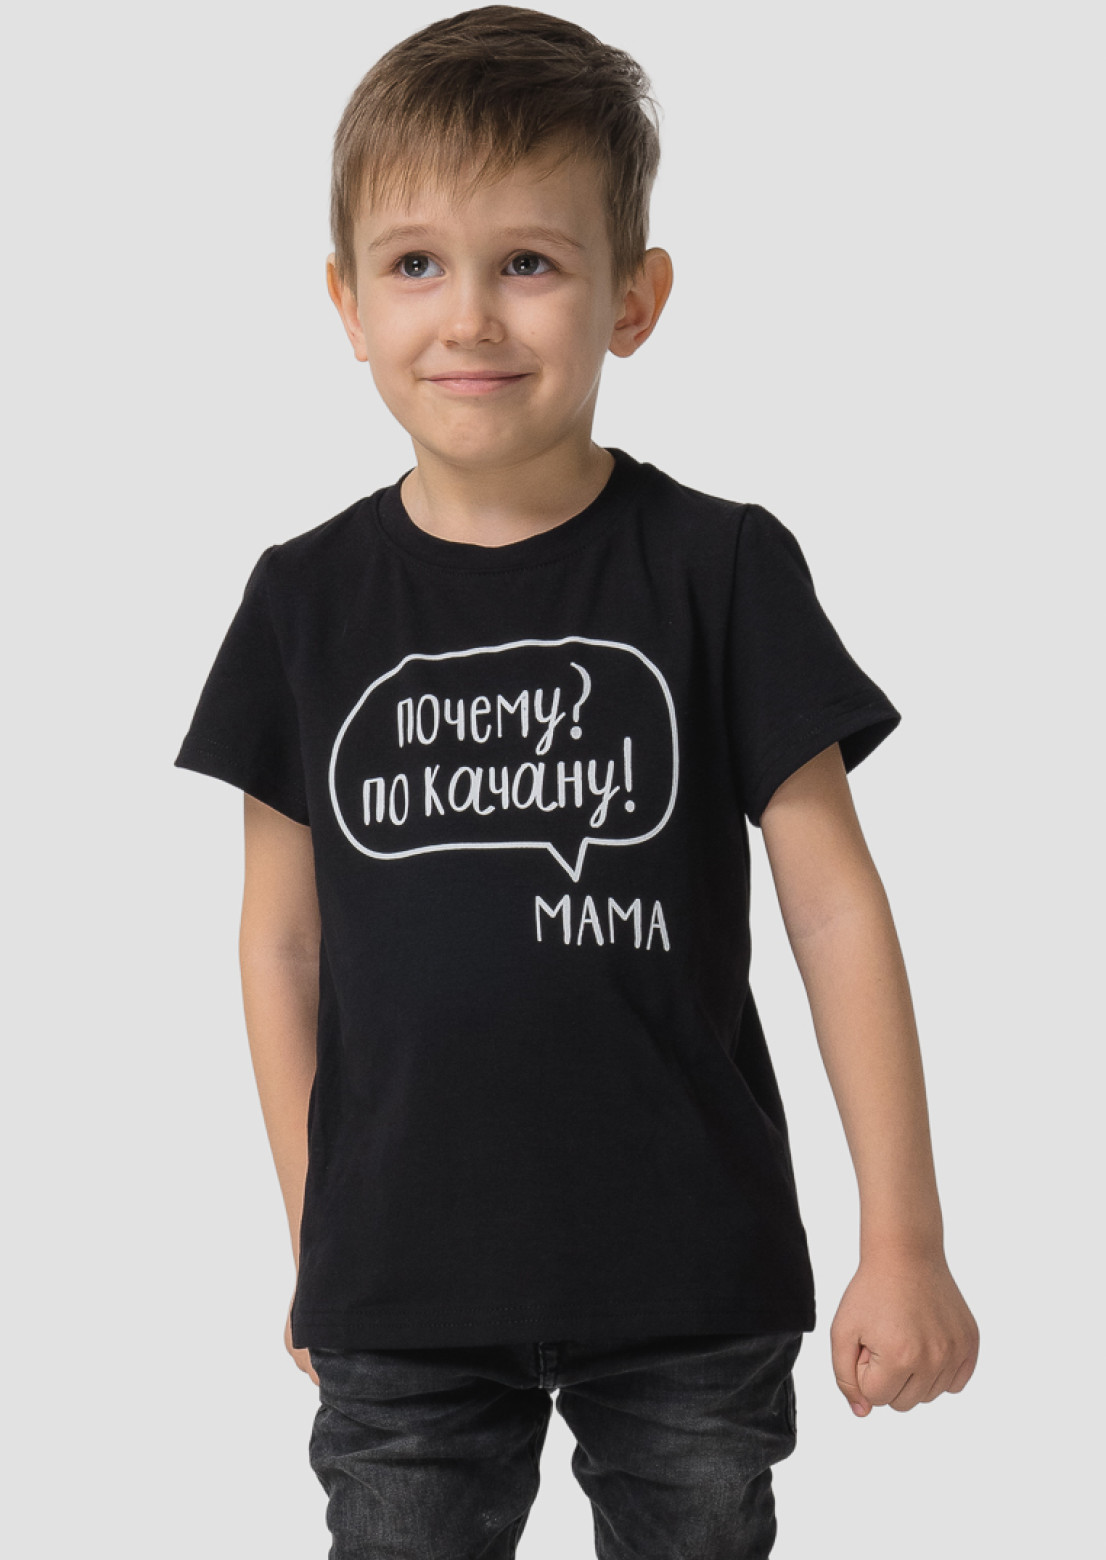 Black kids t-shirt "Почему? По качану! Мама"